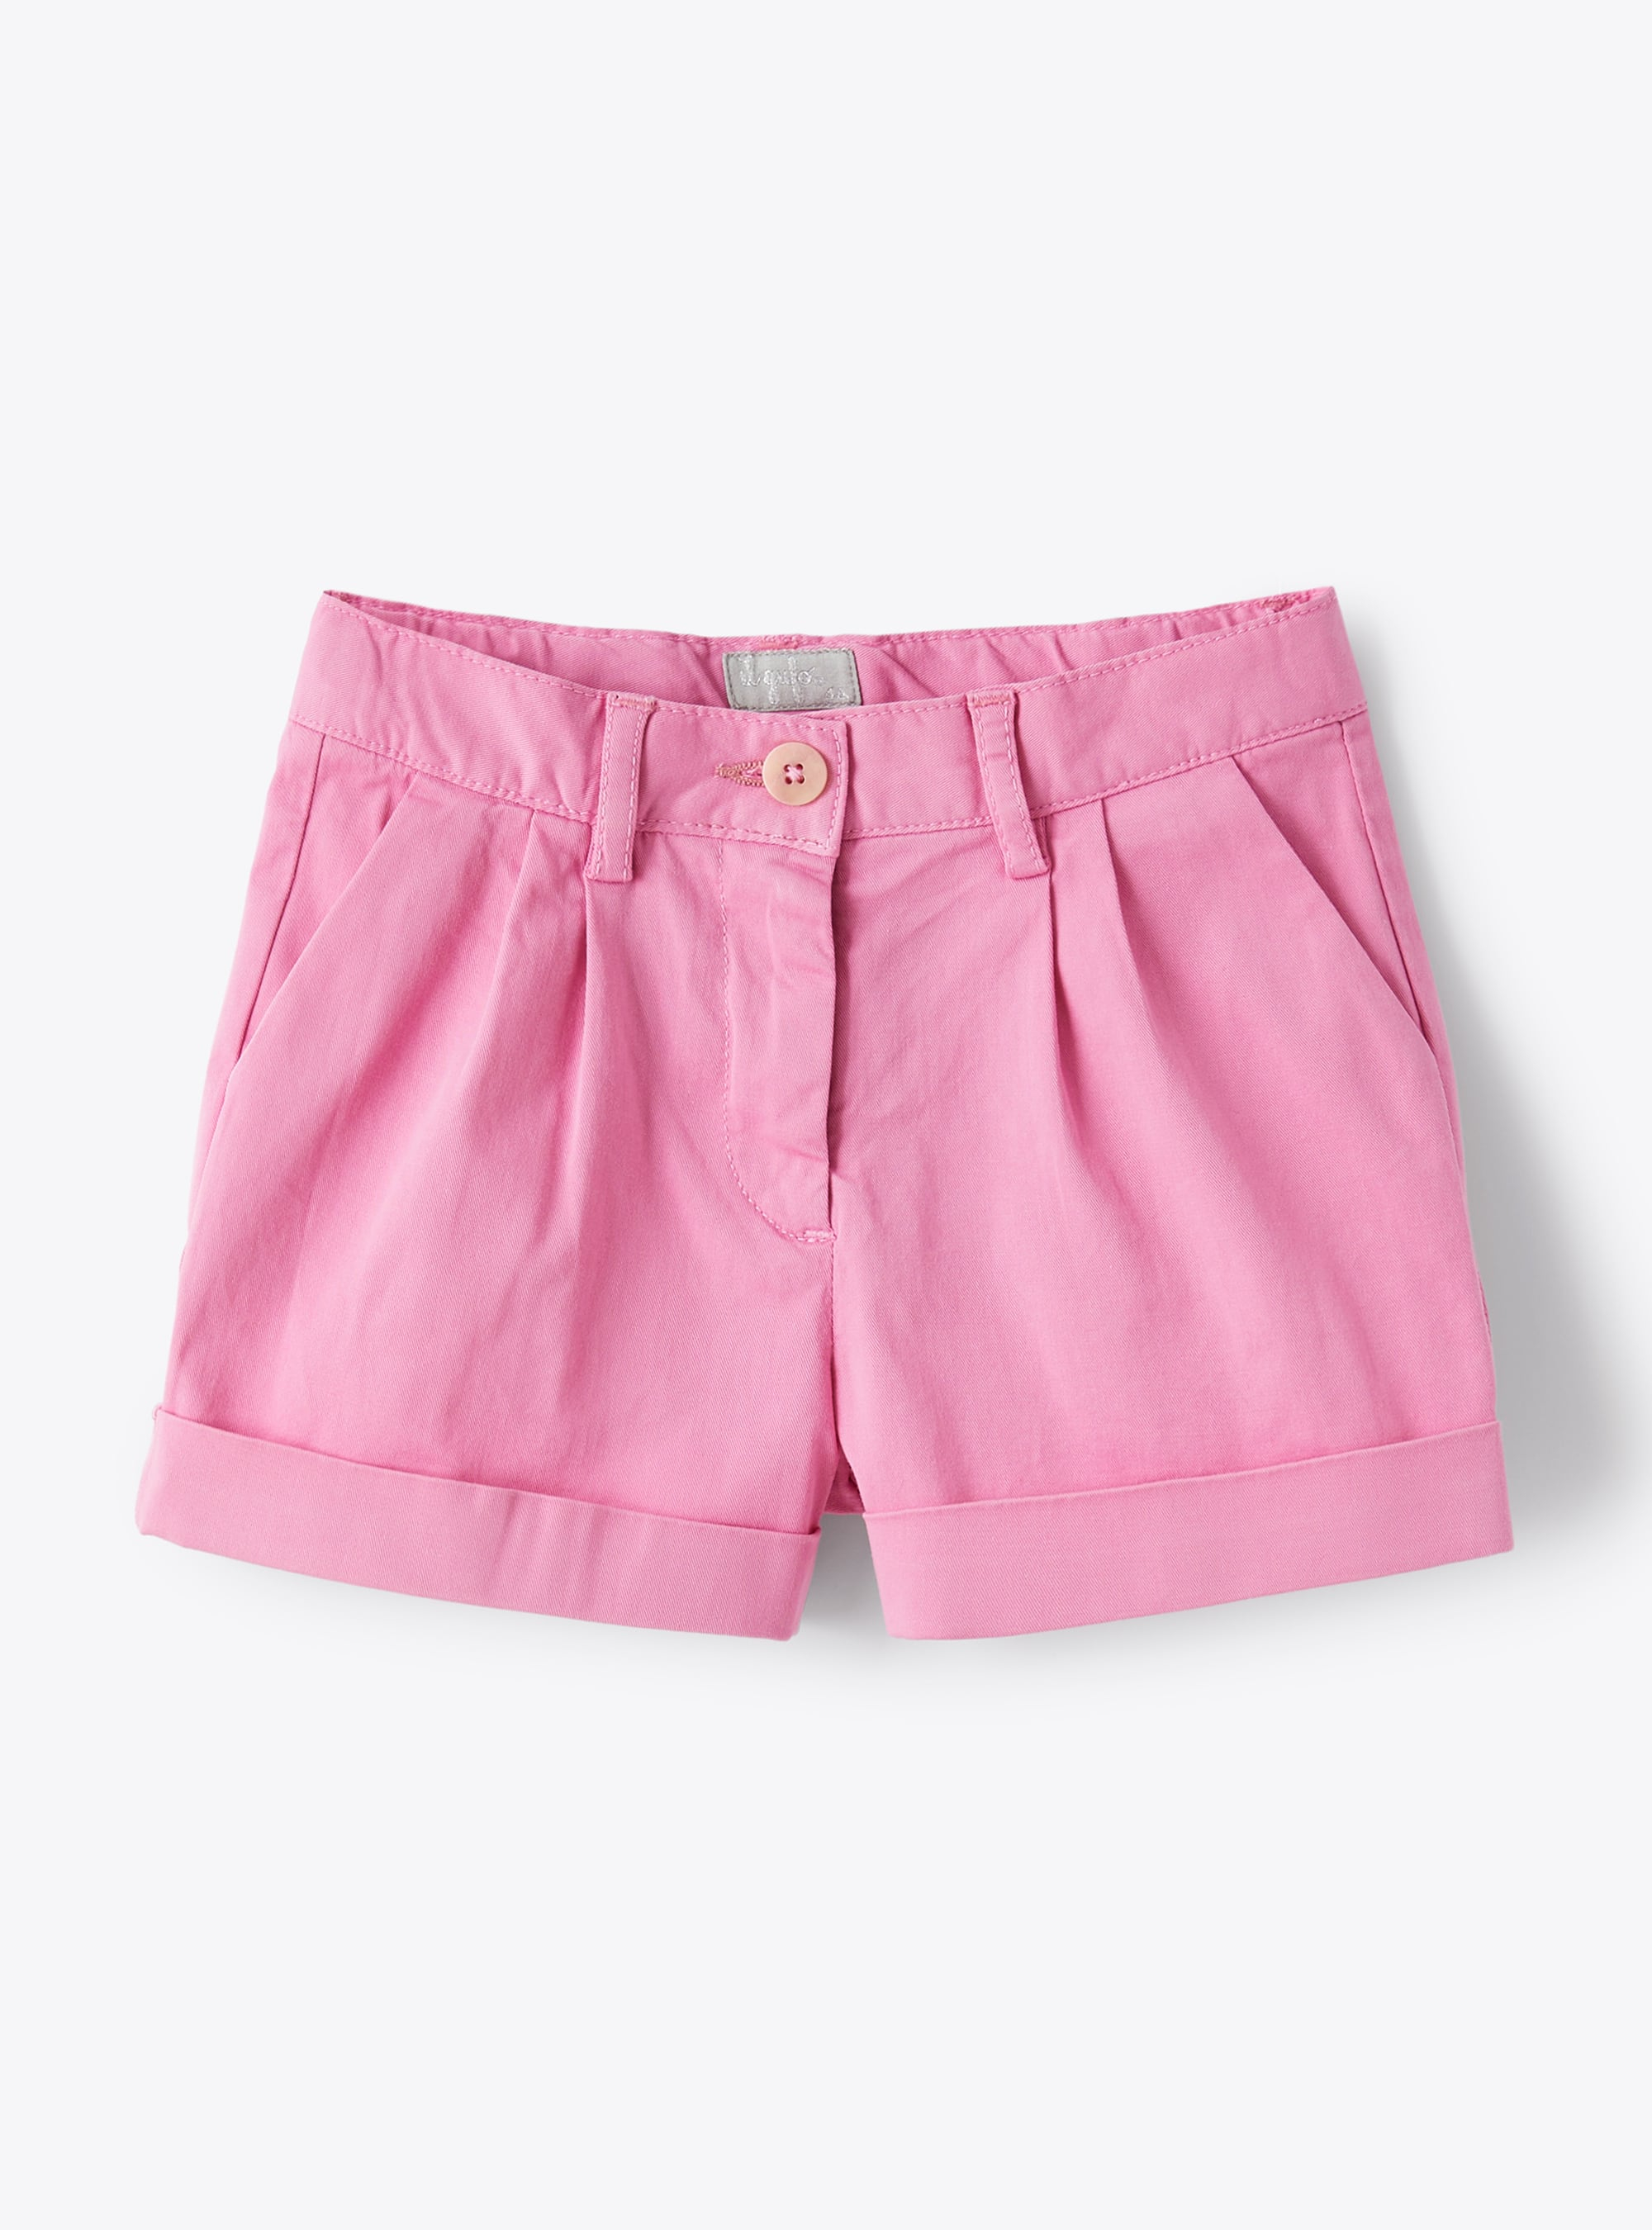 Bermuda shorts in pink cotton gabardine - Trousers - Il Gufo